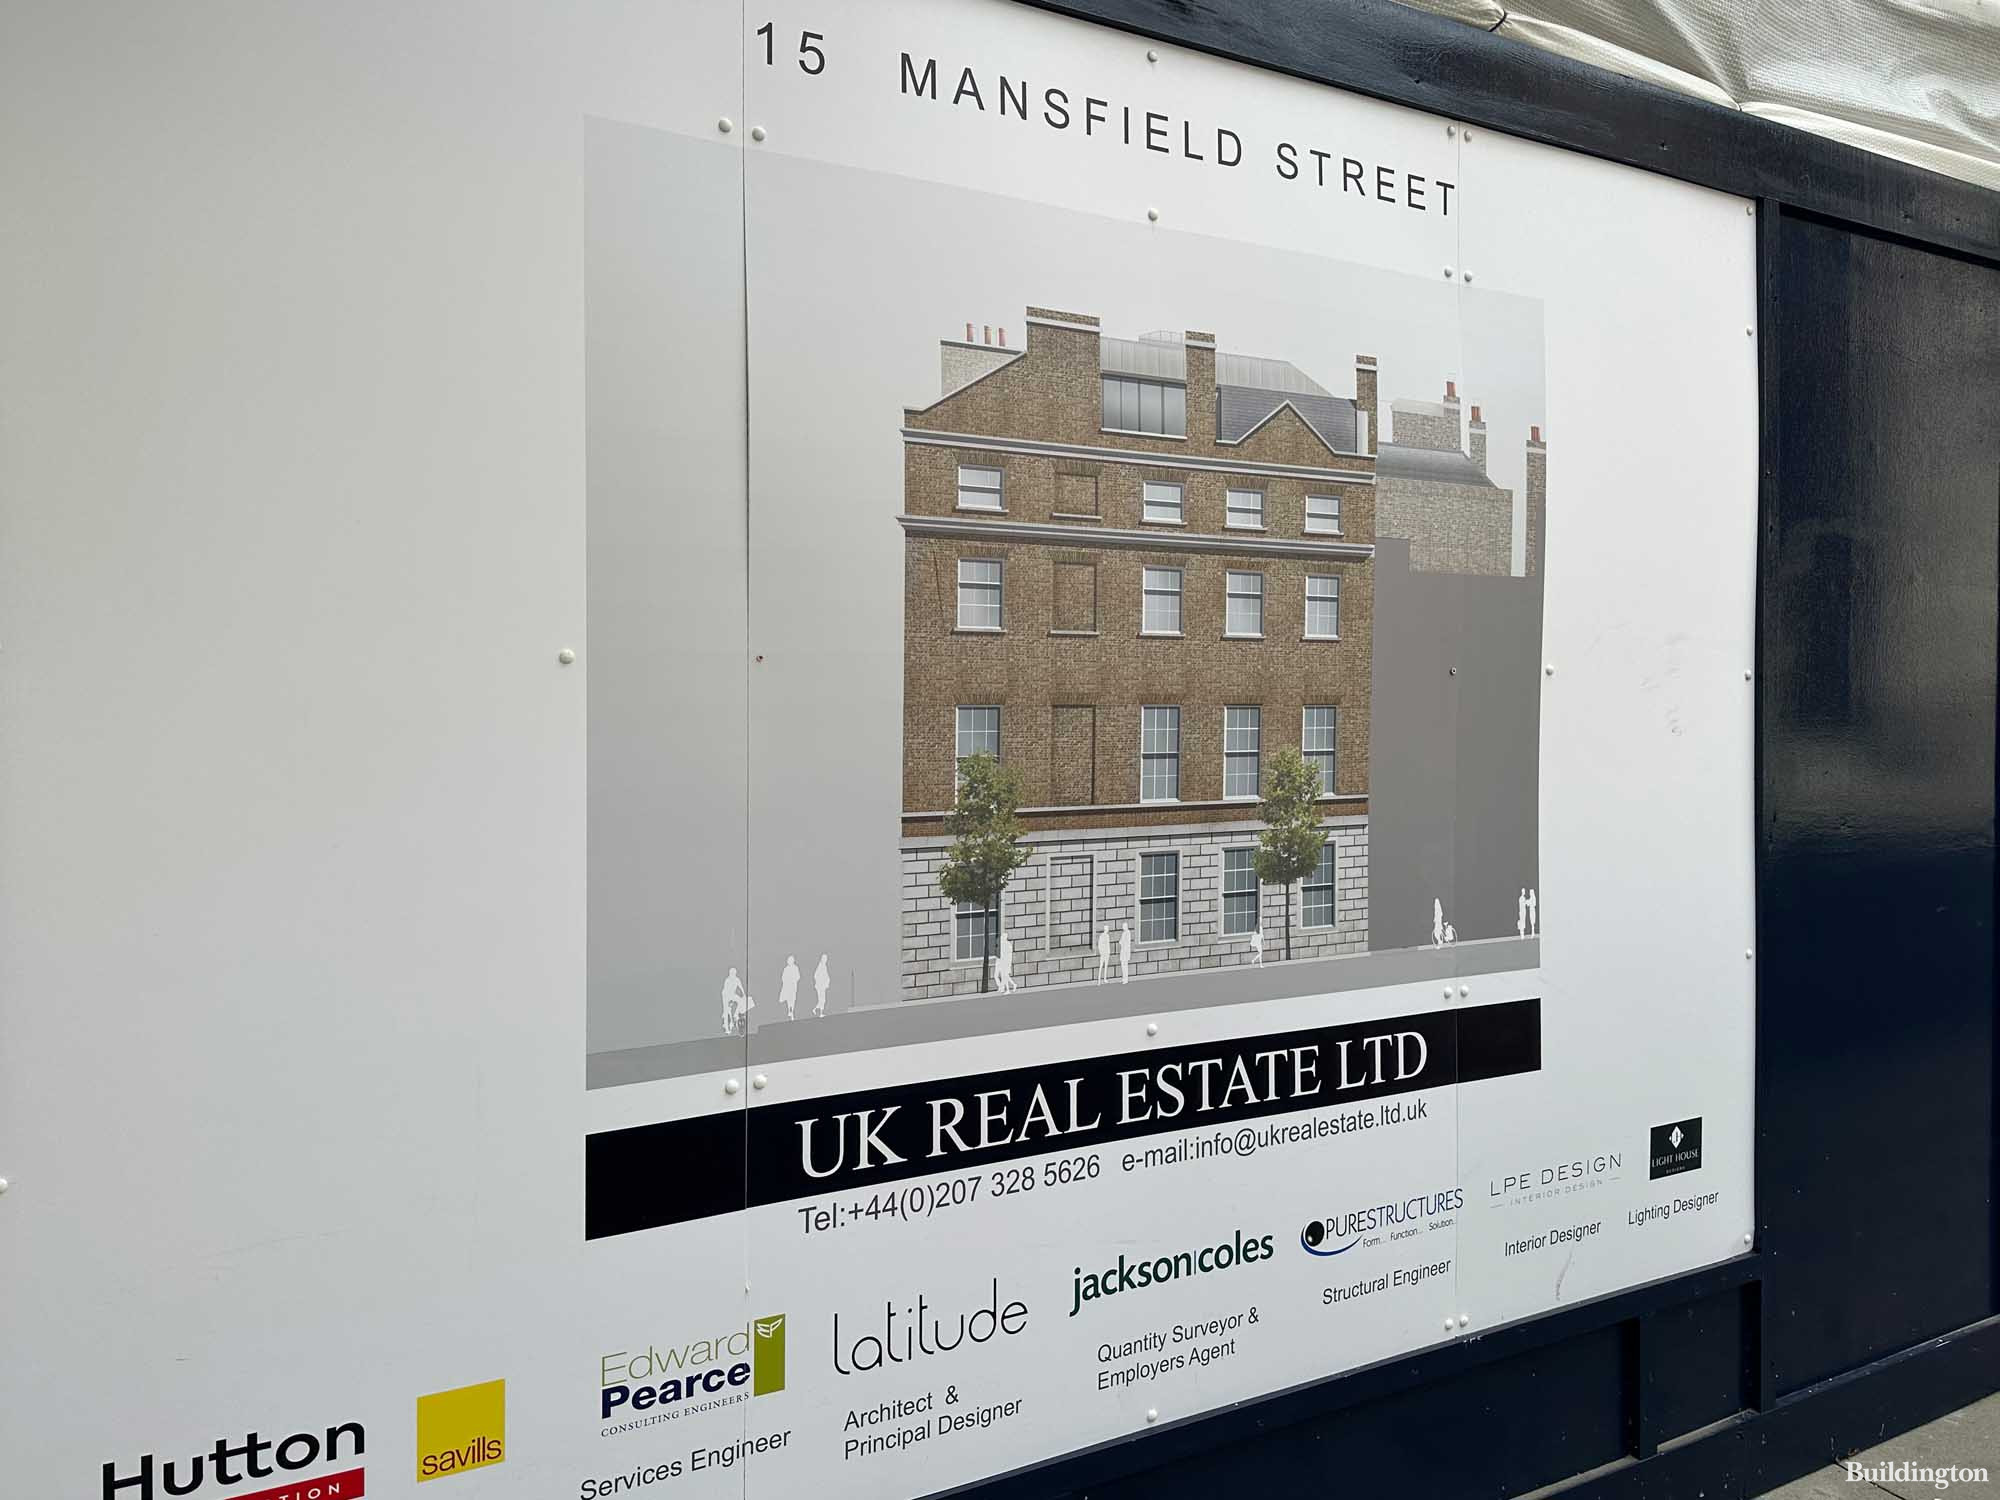 The companies working on 15 Mansfield Street in Marylebone, London W1.